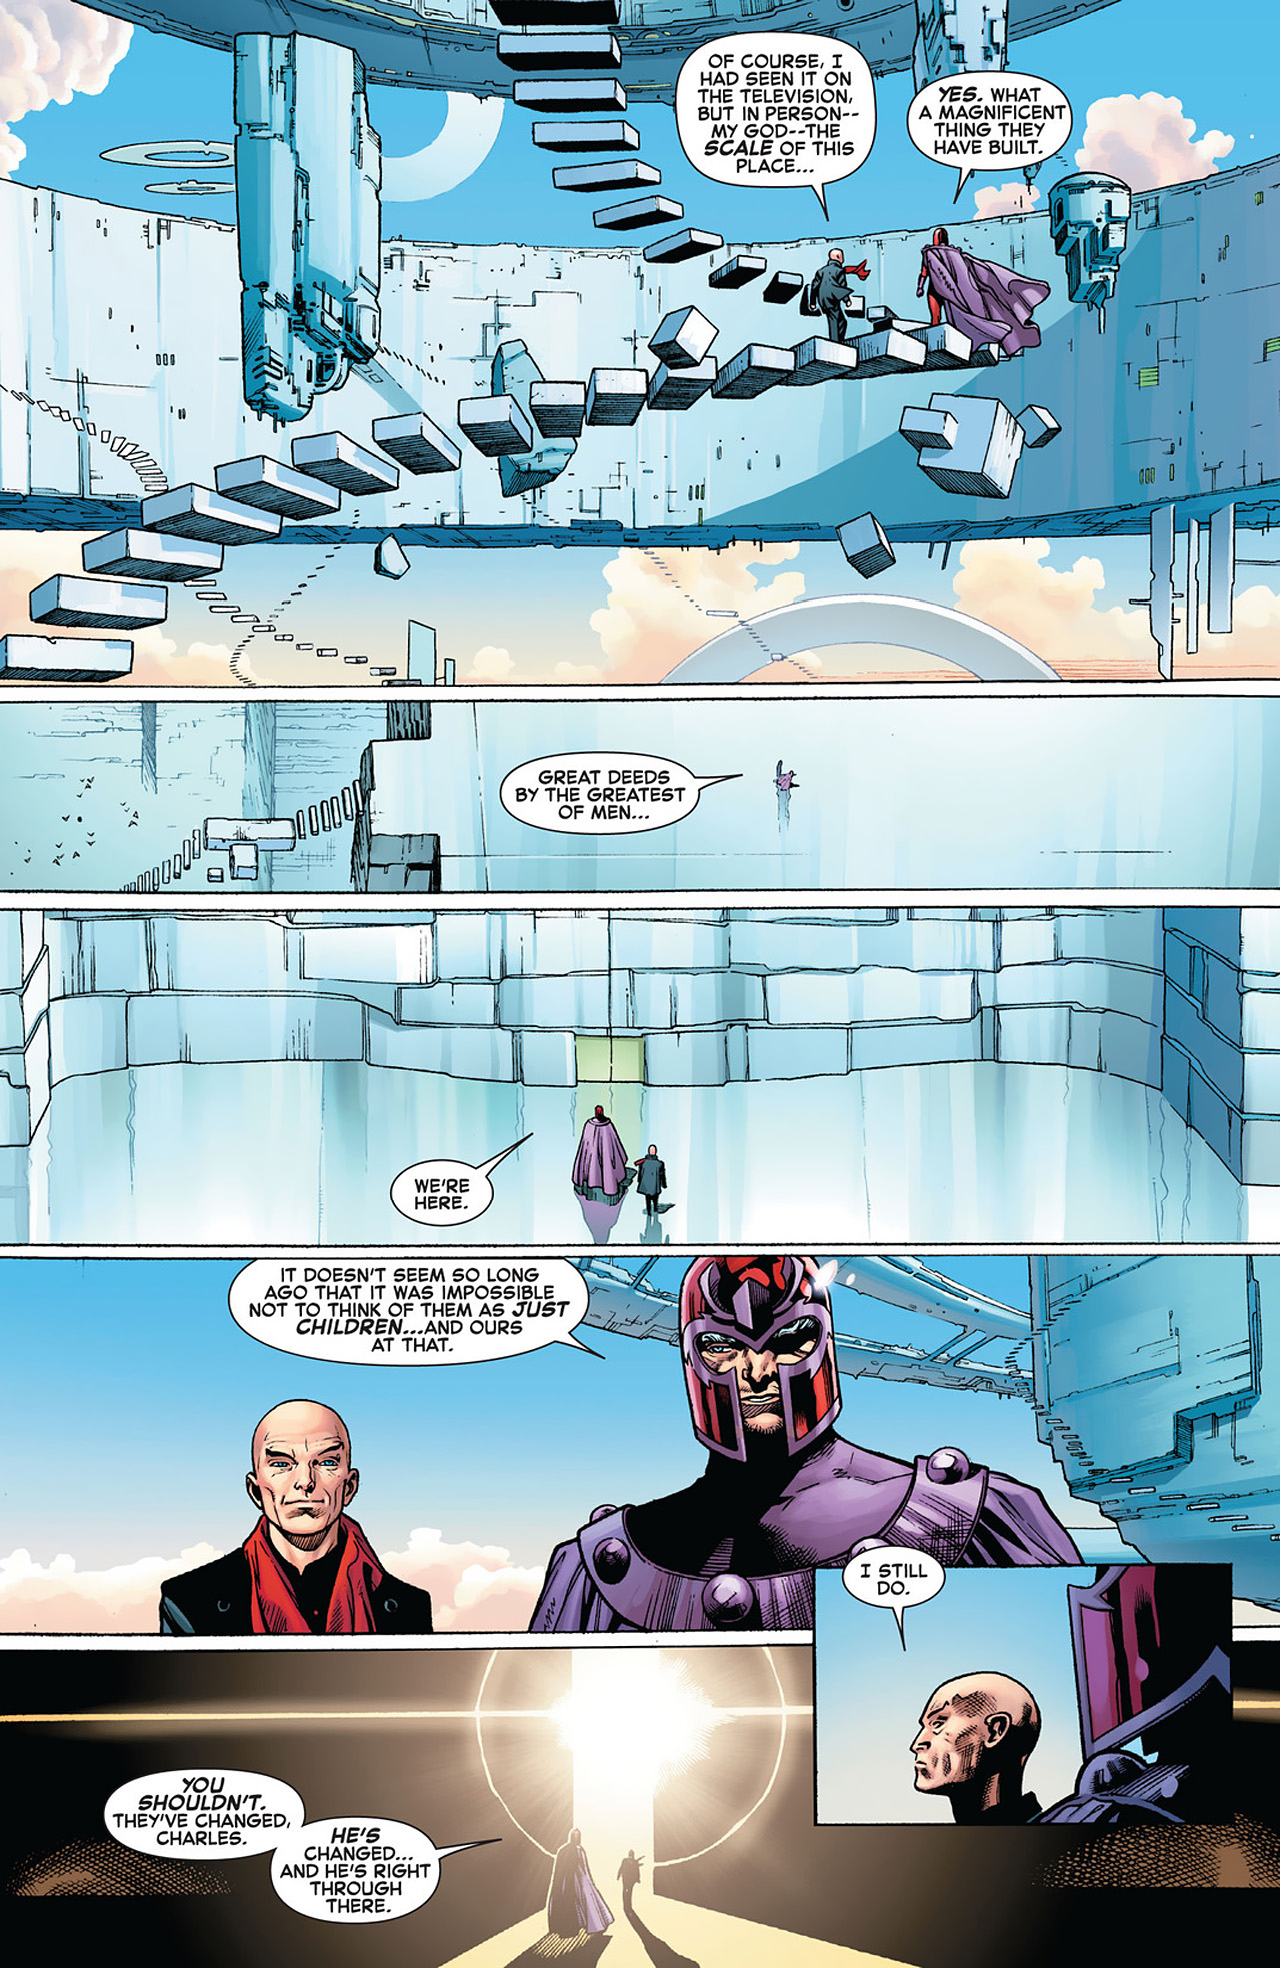 magneto-welcomes-professor-x-to-utopia-3.jpg